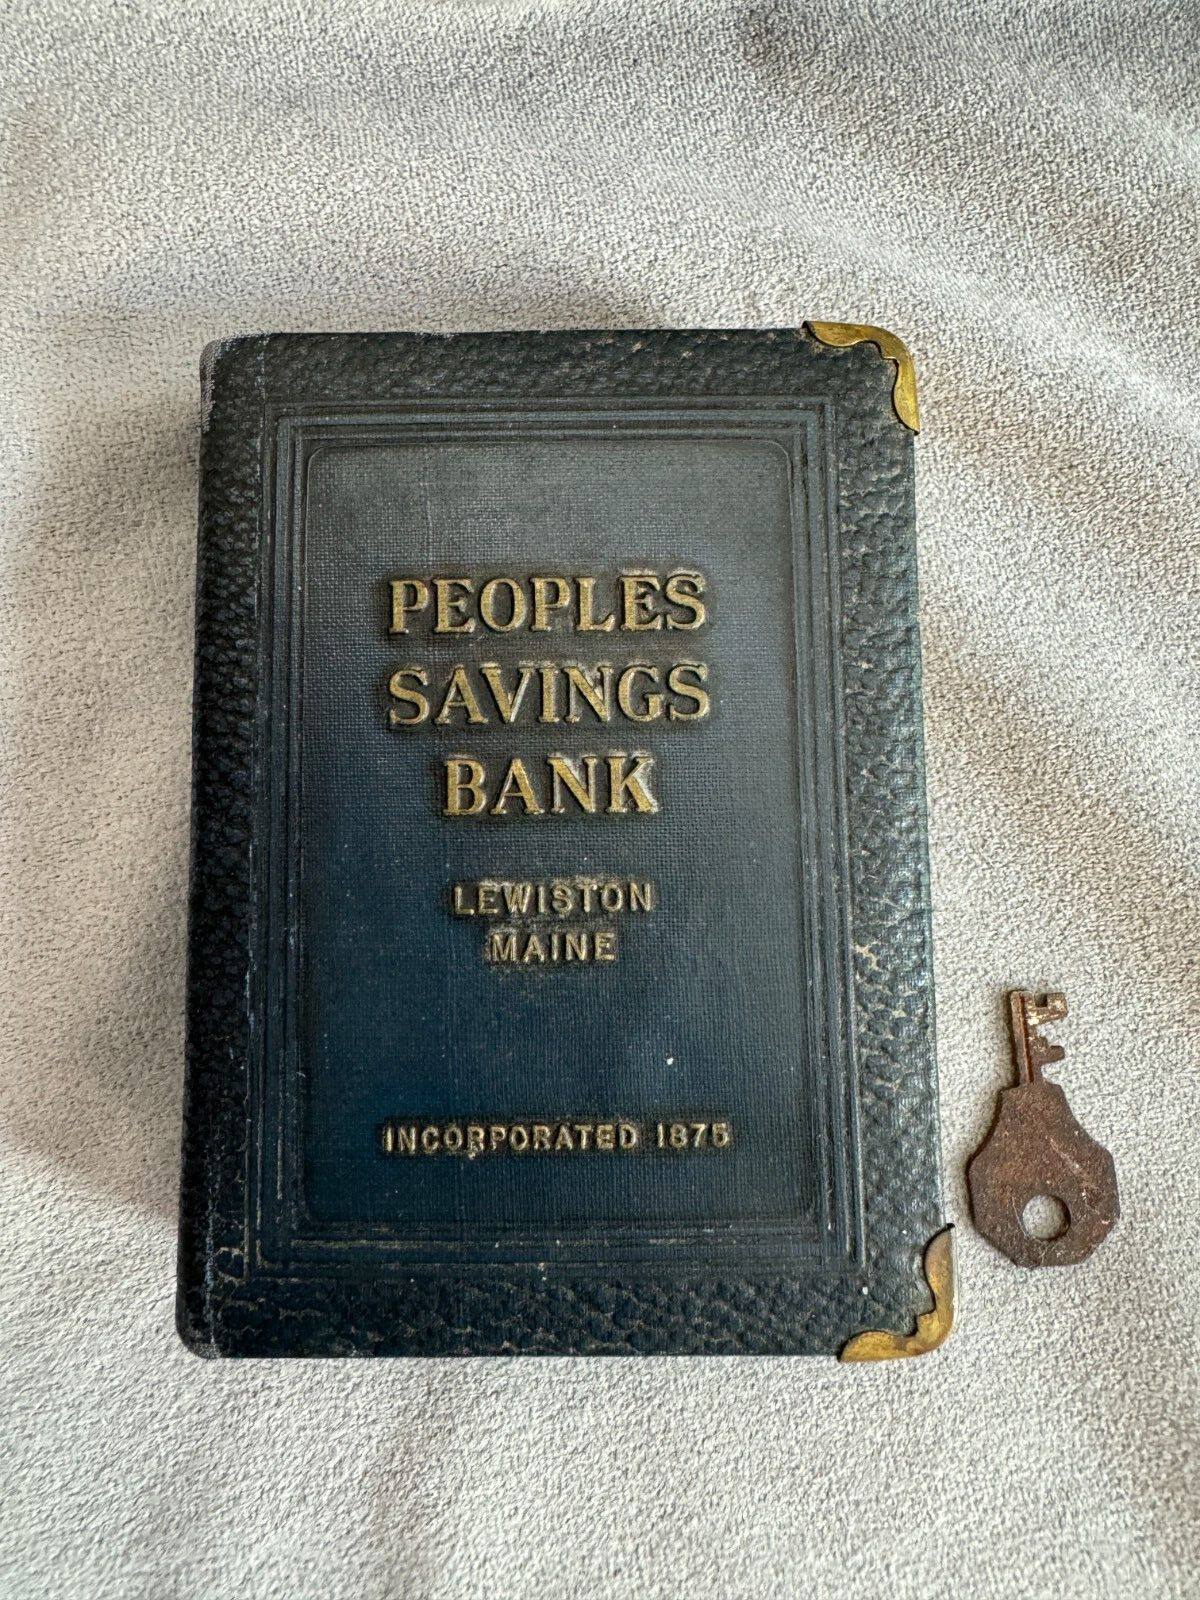 Vintage Metal Book Bank “Peoples Savings Bank, Lewiston Maine” & Key